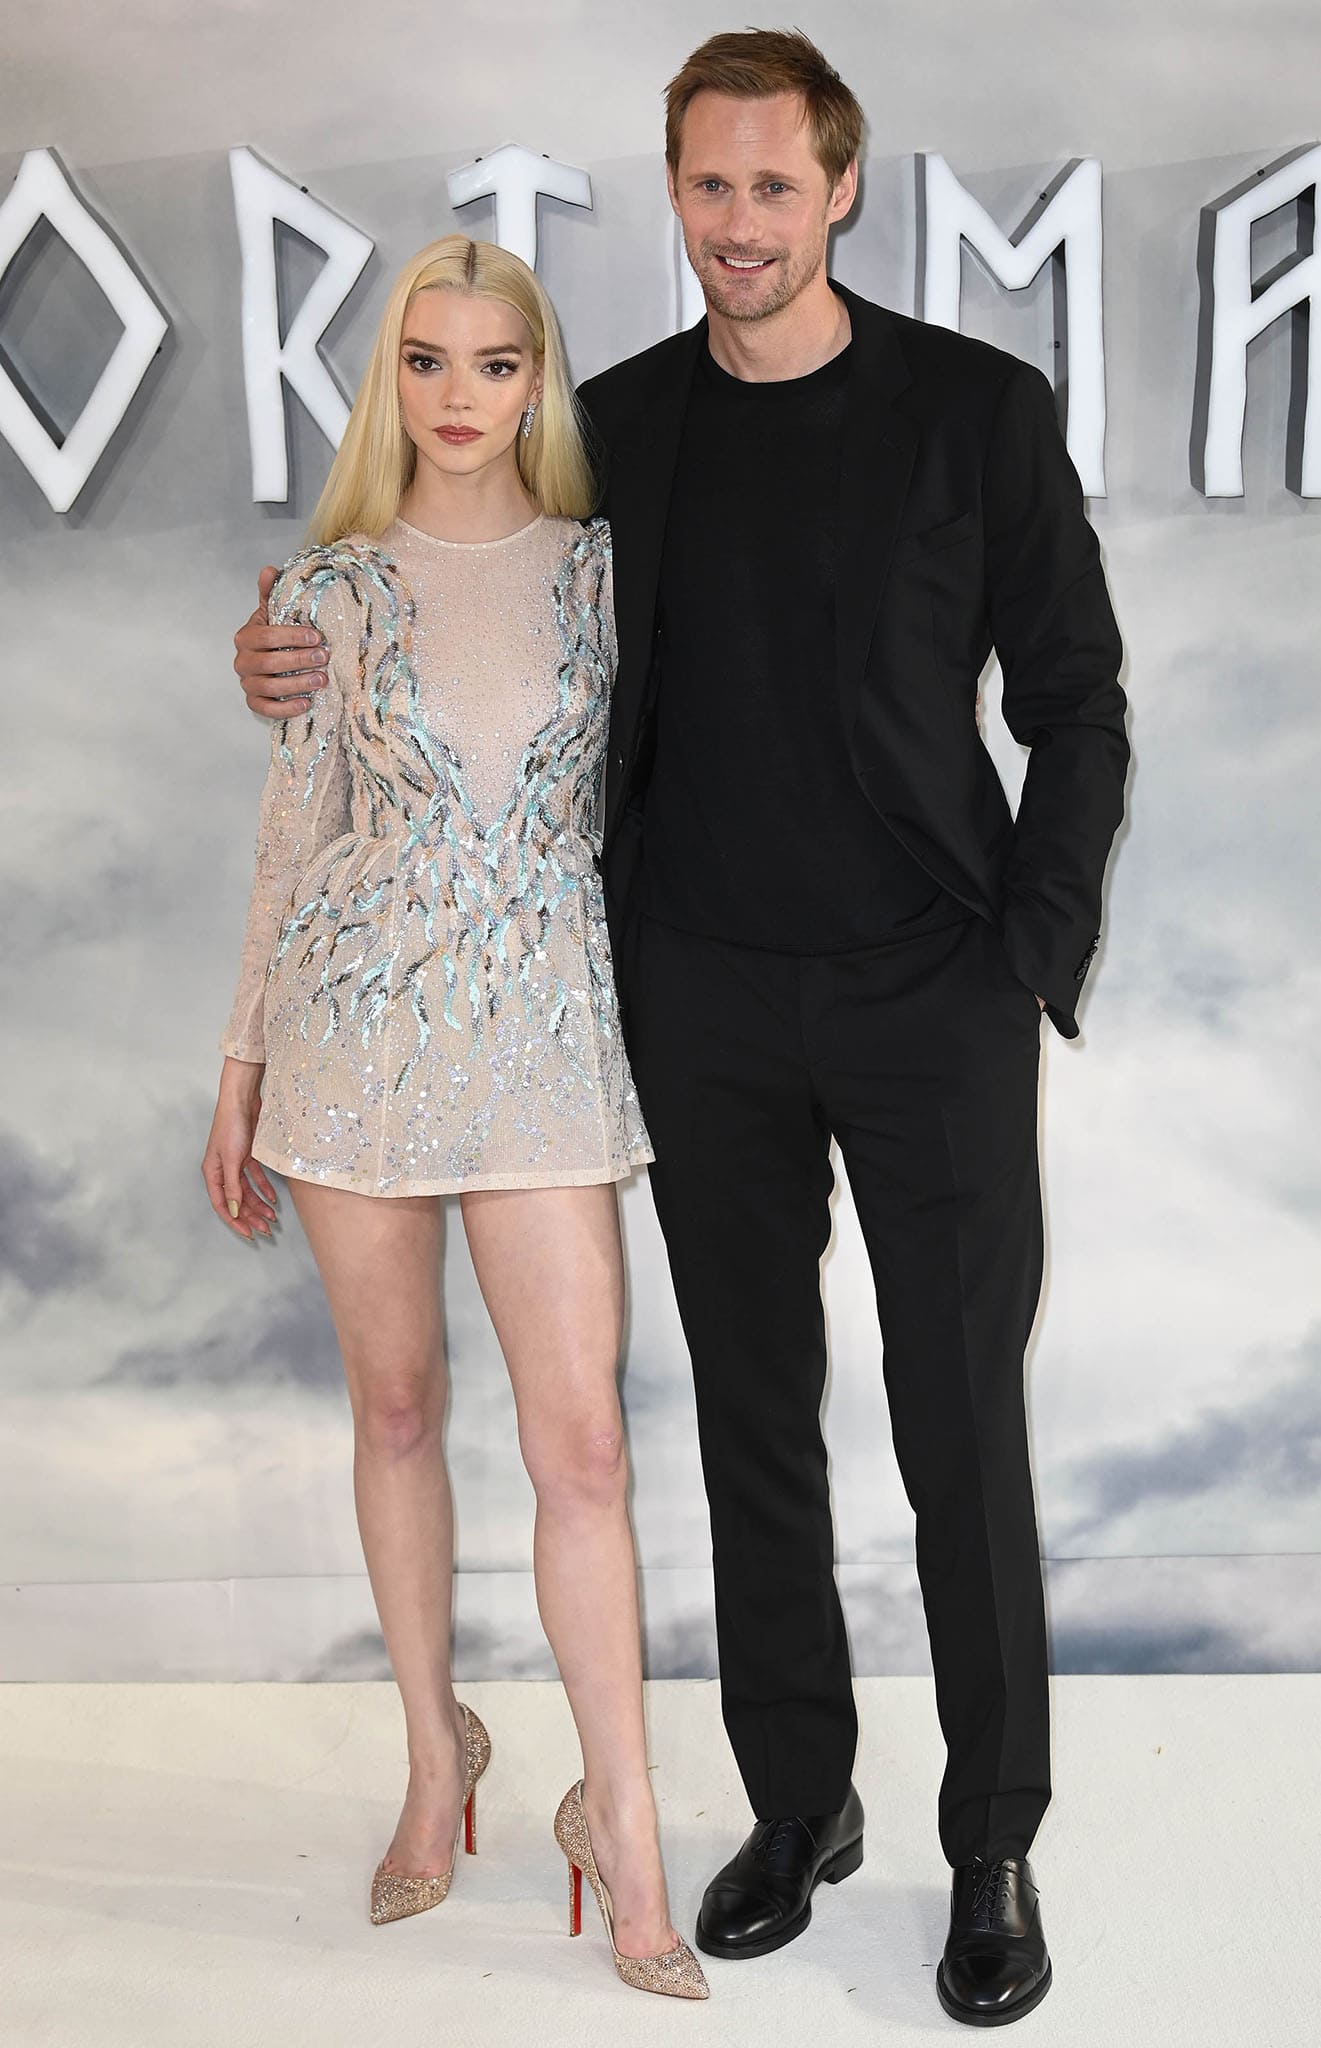 Anya Taylor-Joy and Alexander Skarsgard pose together at the London premiere of The Northman on April 5, 2022